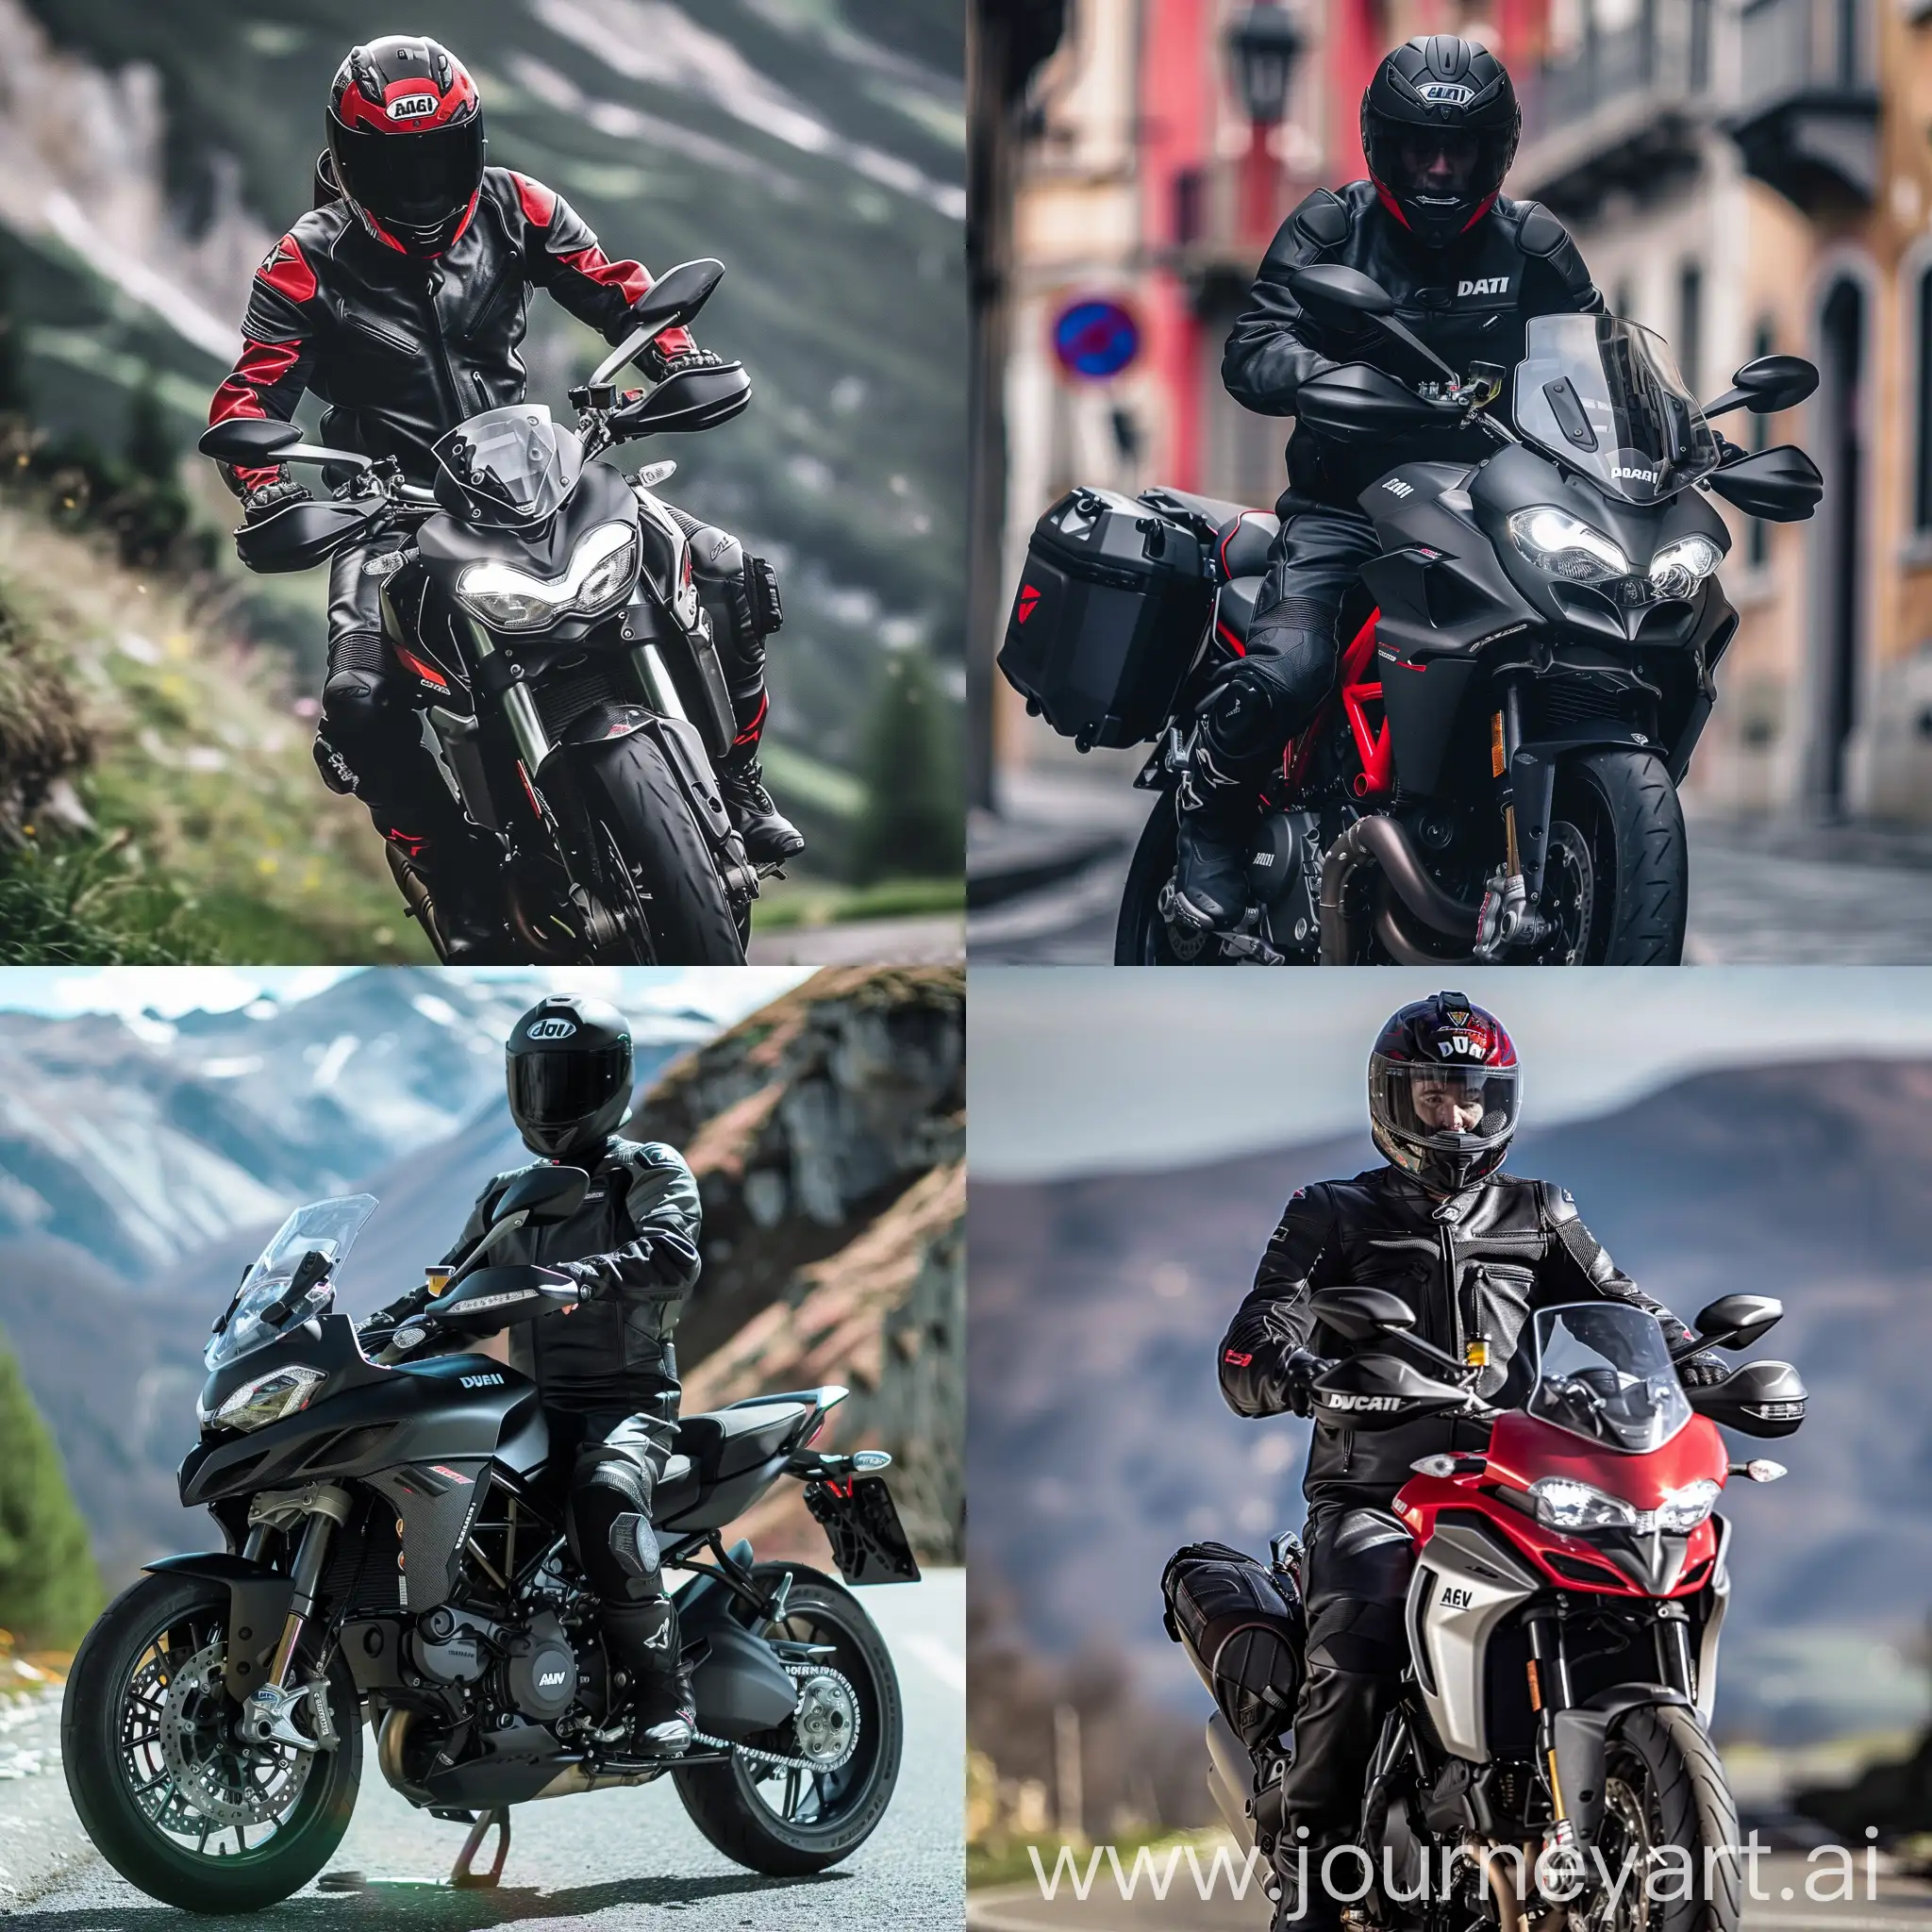 Ducati Multistrada, biker in Dainese leather, AGV helmet